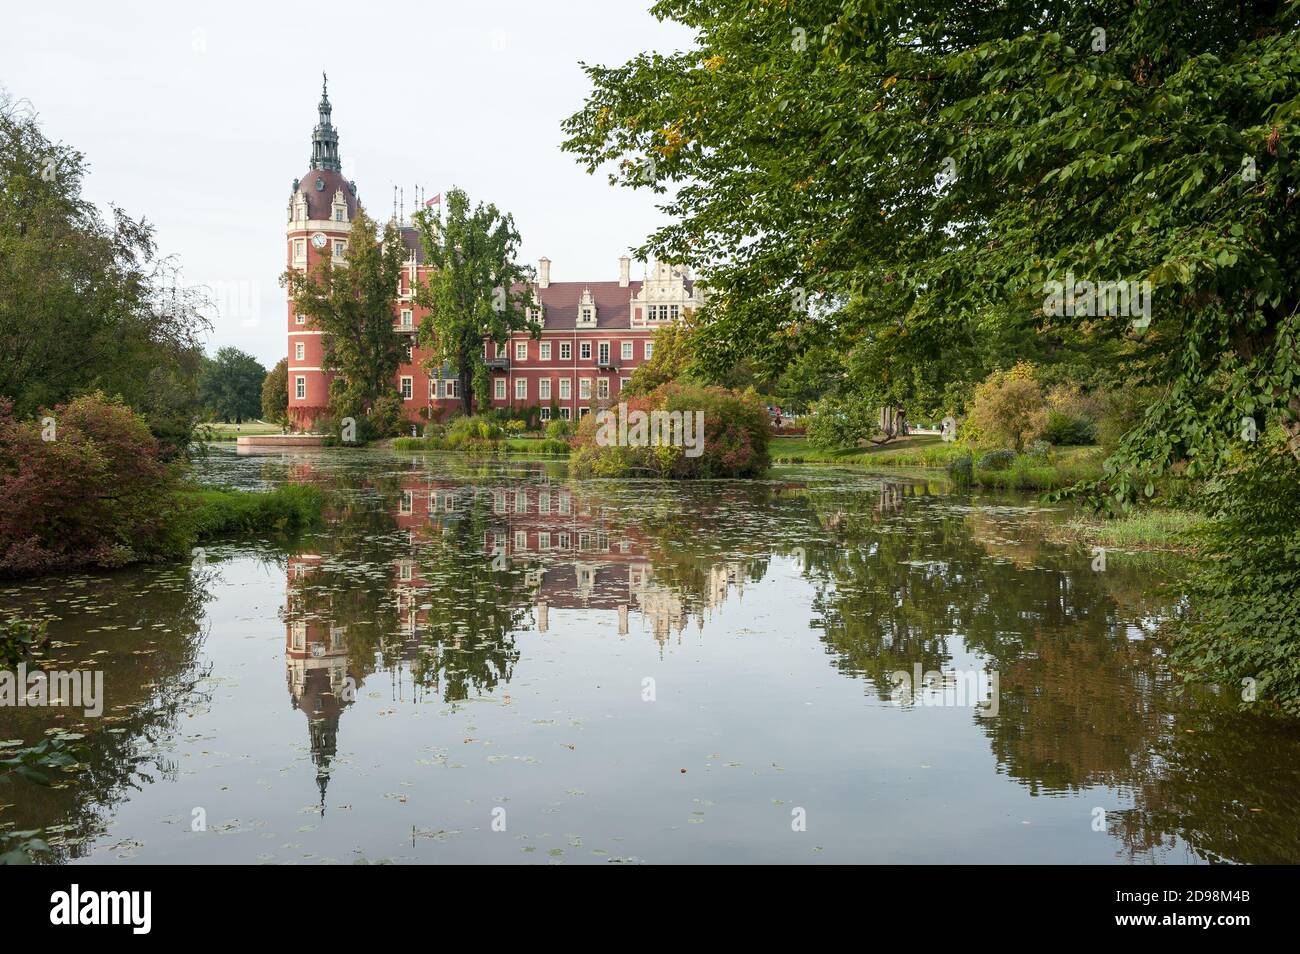 Muskau palace, Muskau Park, Upper Lusatia, Germany Stock Photo - Alamy